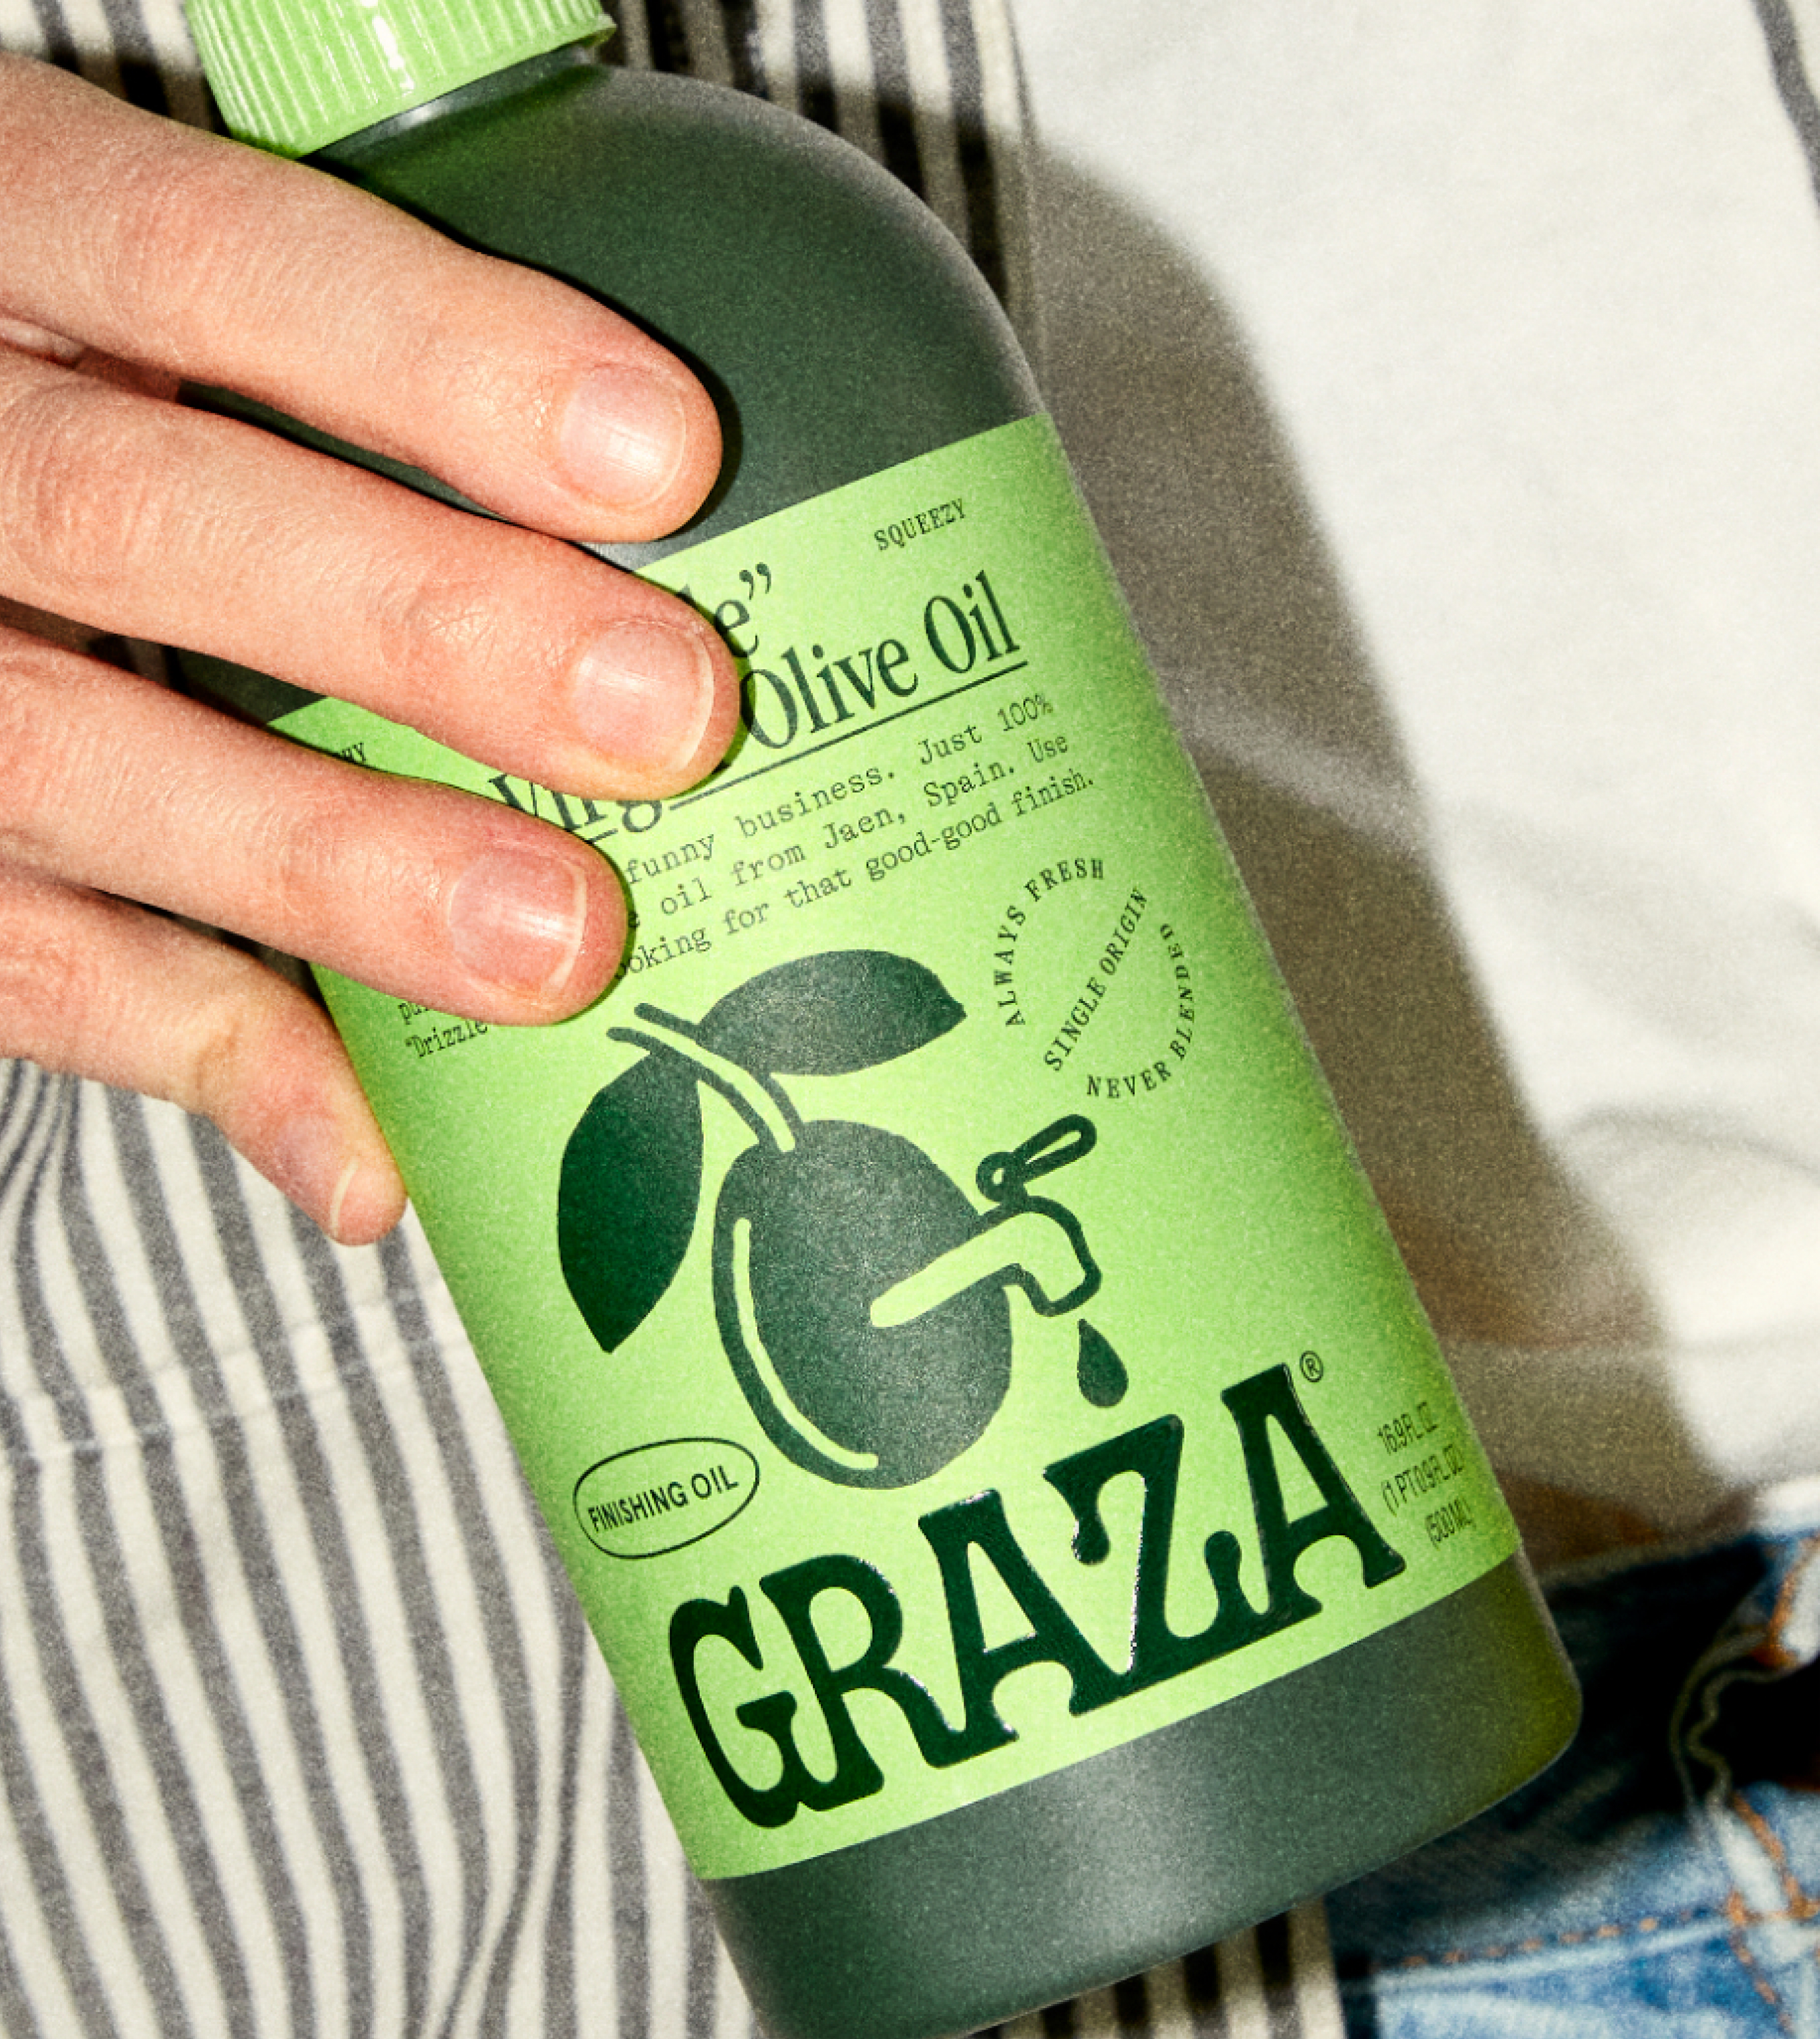 Gander Graza Bottle Closeup